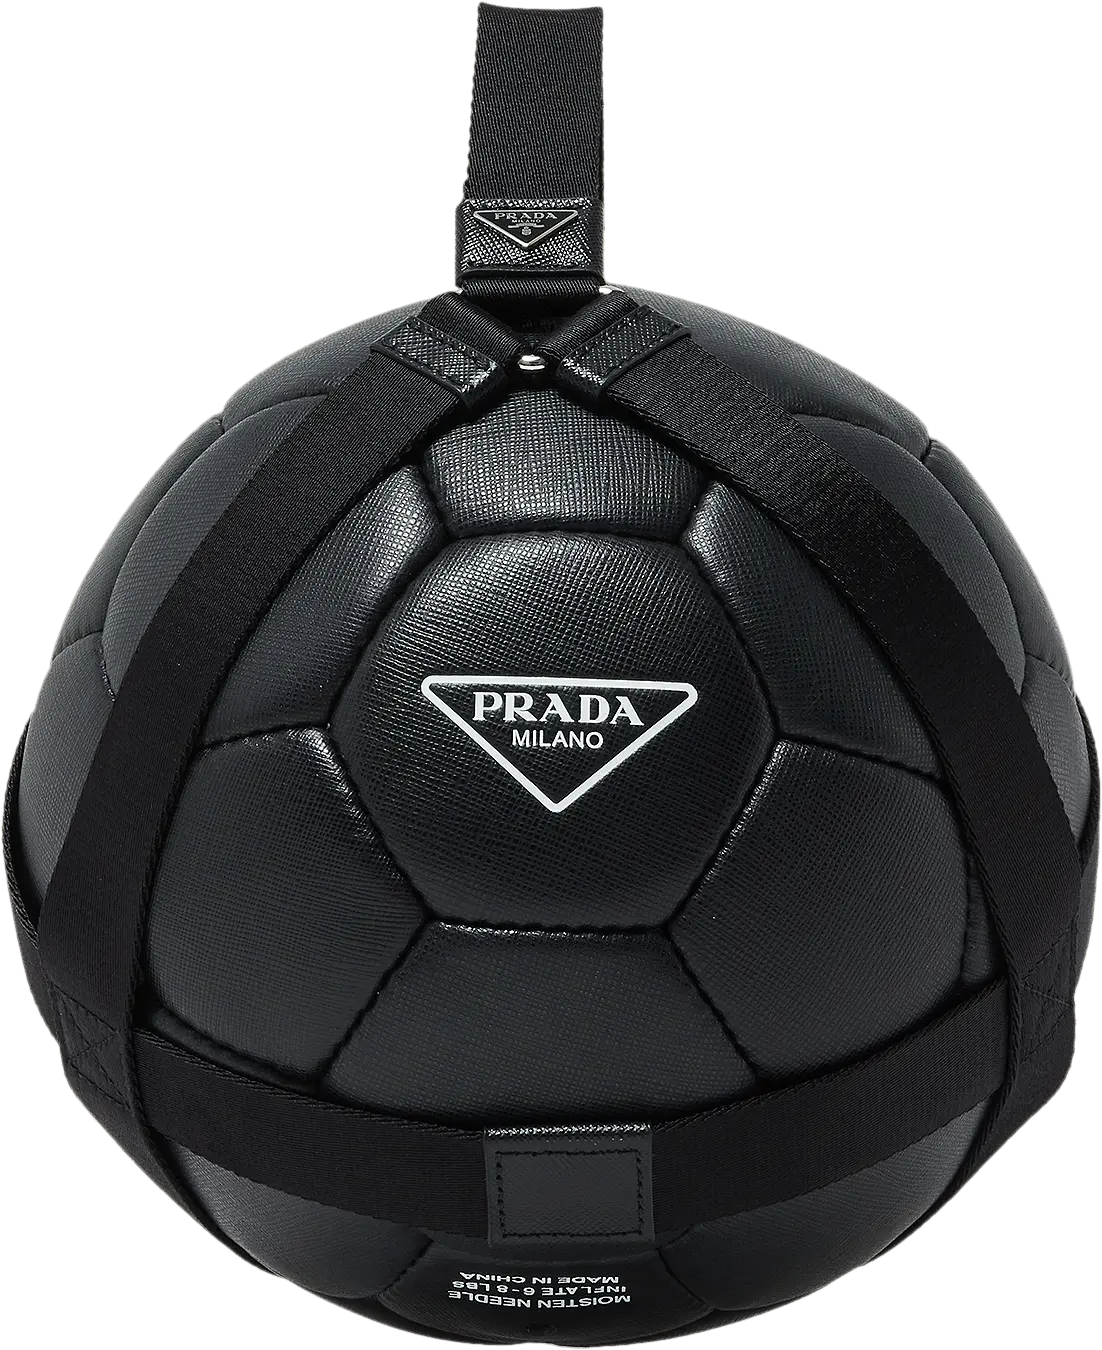  Prada Saffiano Logo Soccer Ball In Black